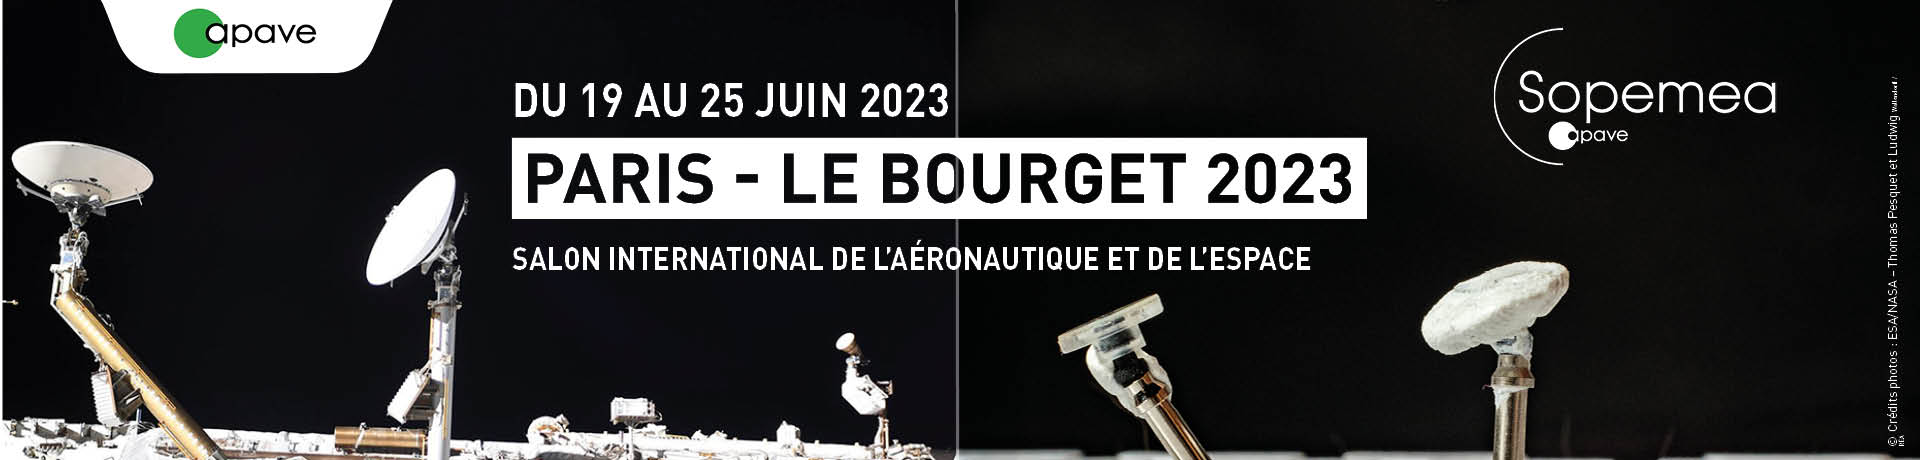 Invitation to Le Bourget